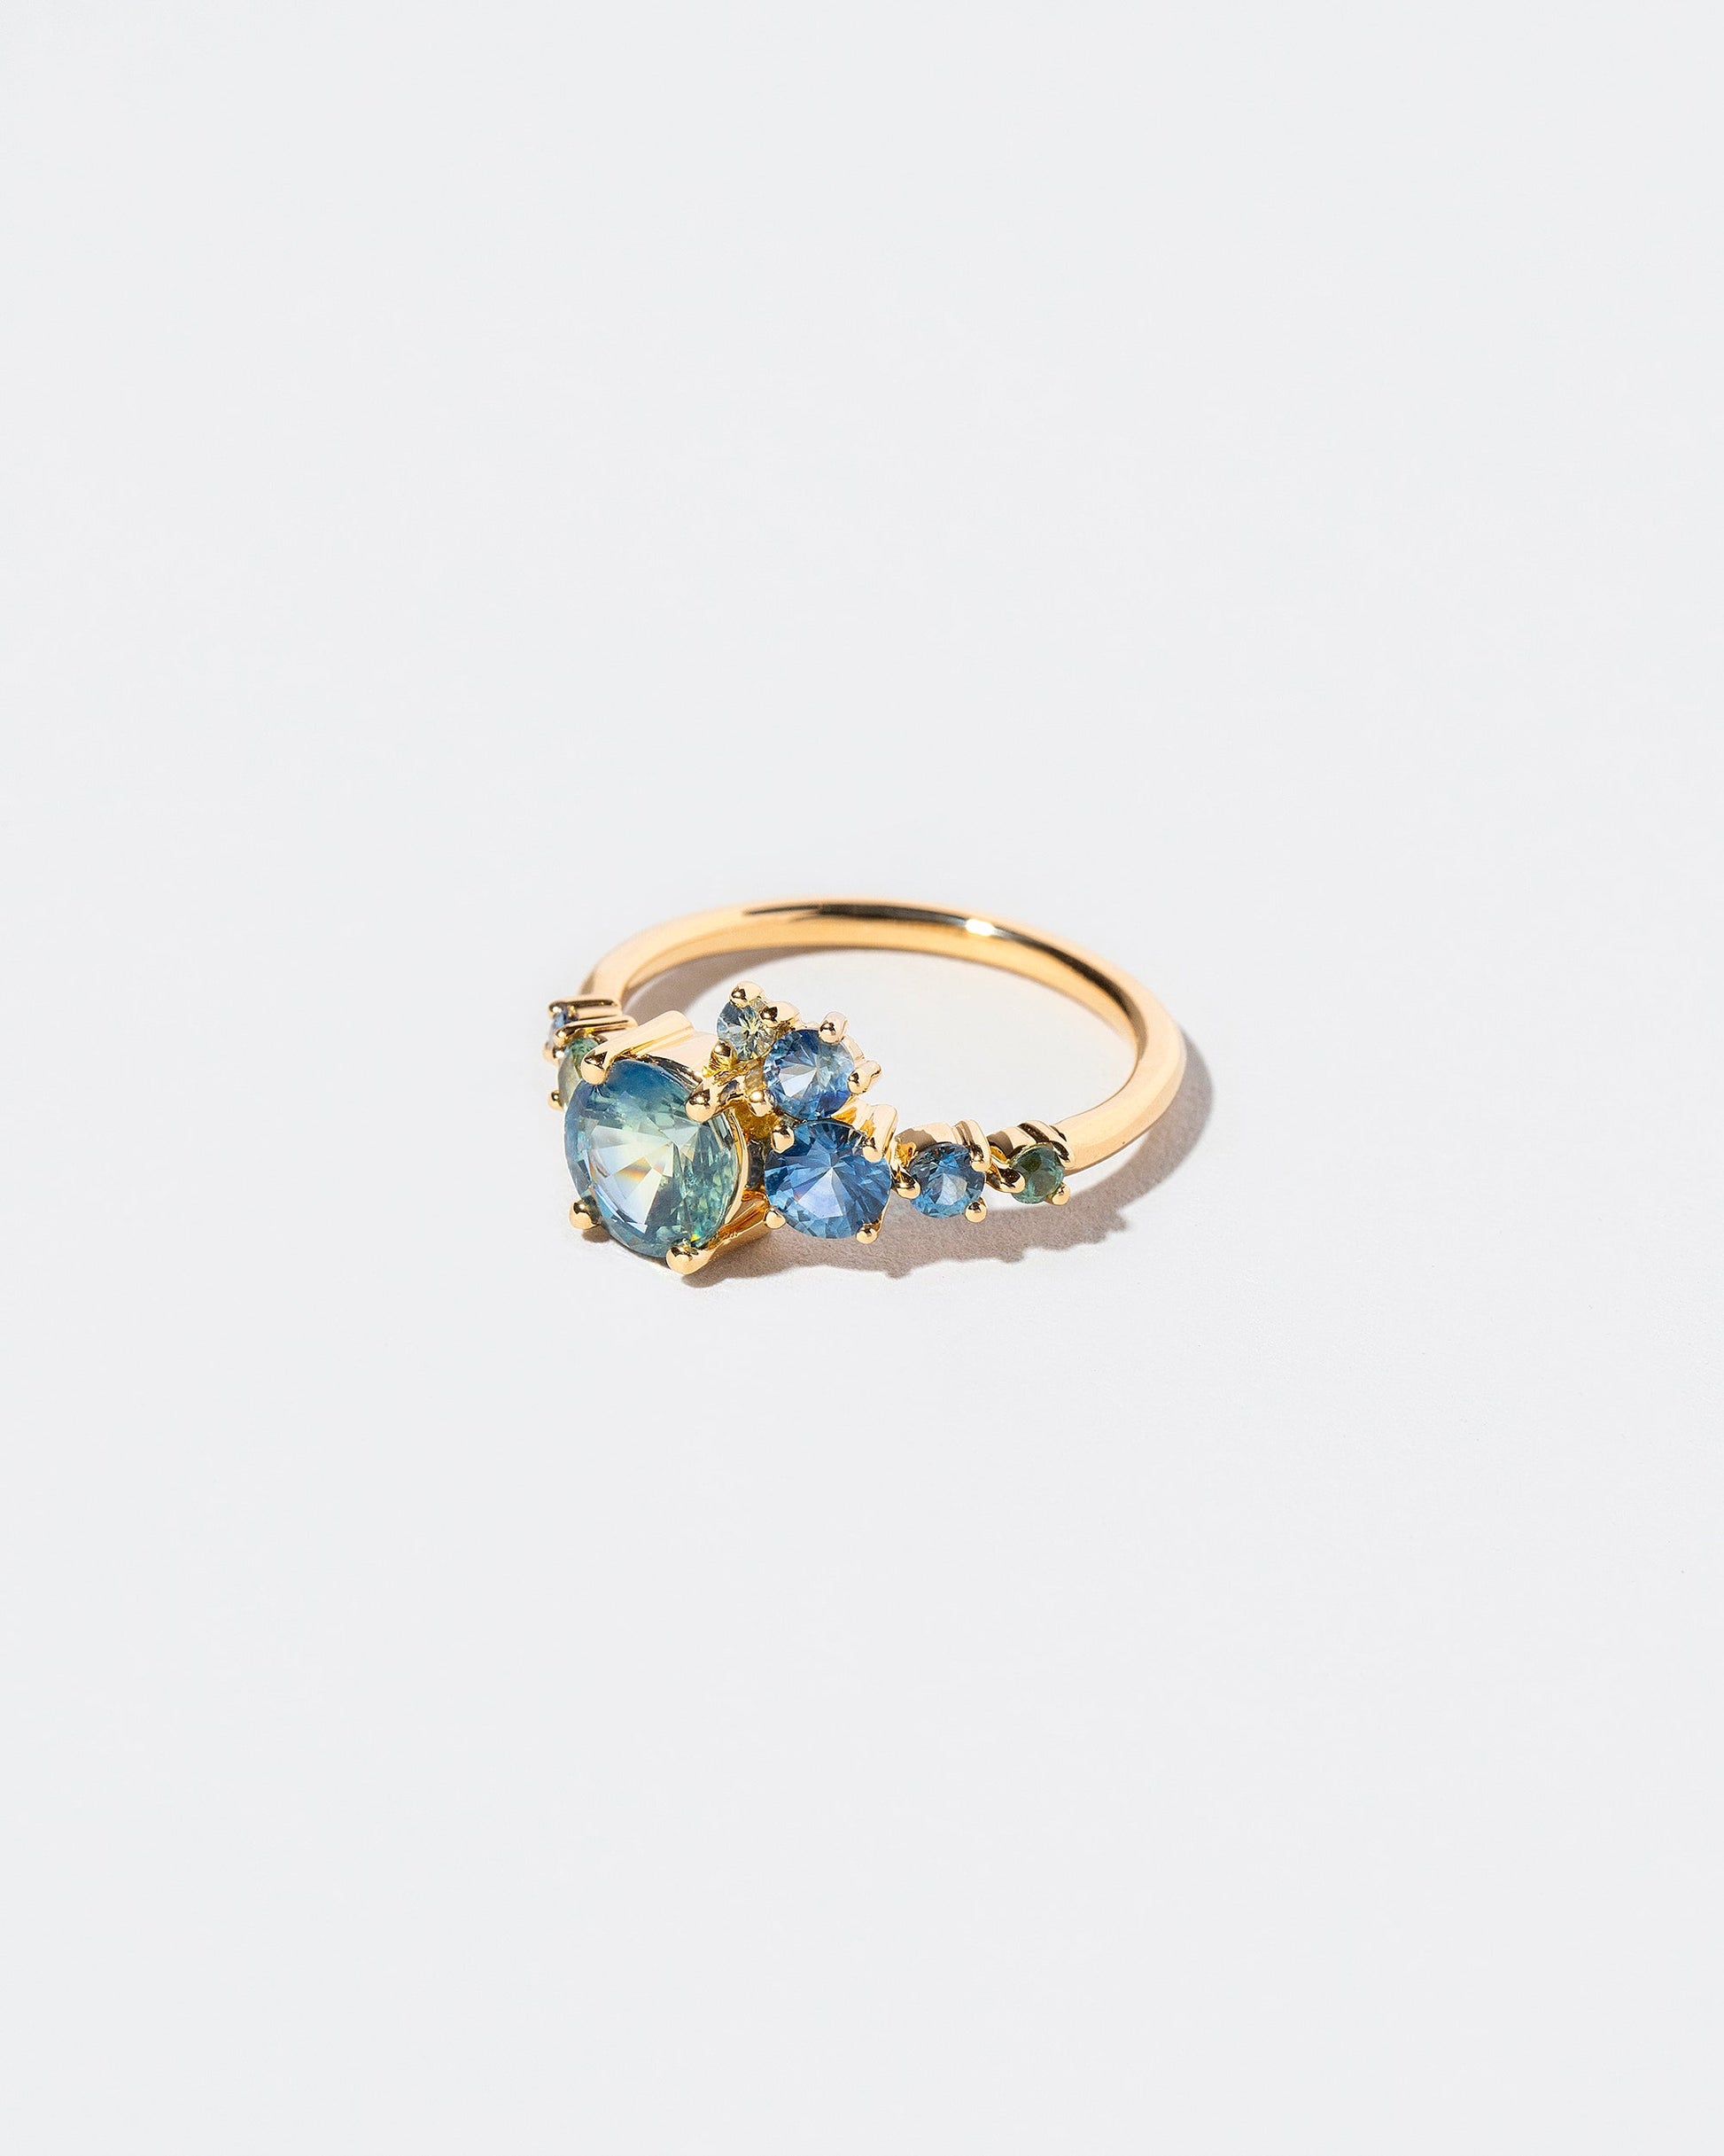  Luna Ring - Bicolor Sapphire on light color background.